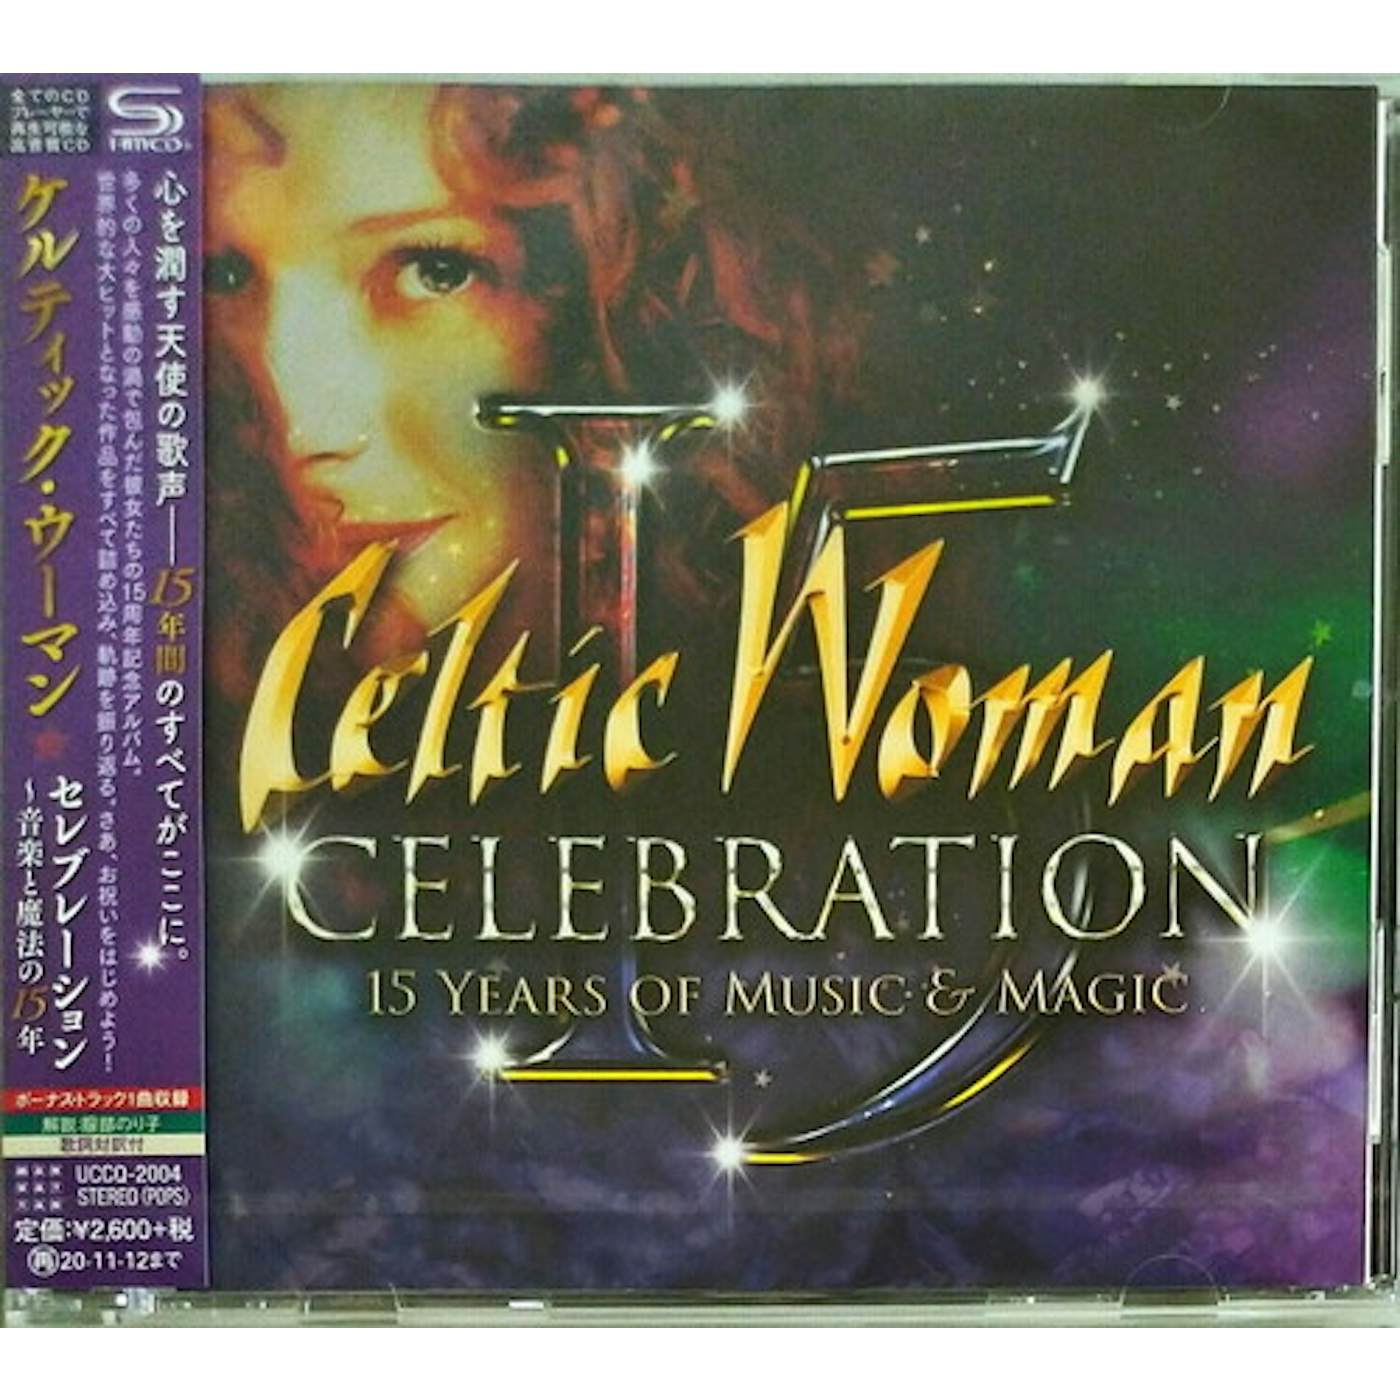 Celtic Woman CELEBRATION (15 YEARS OF MUSIC & MAGIC) CD